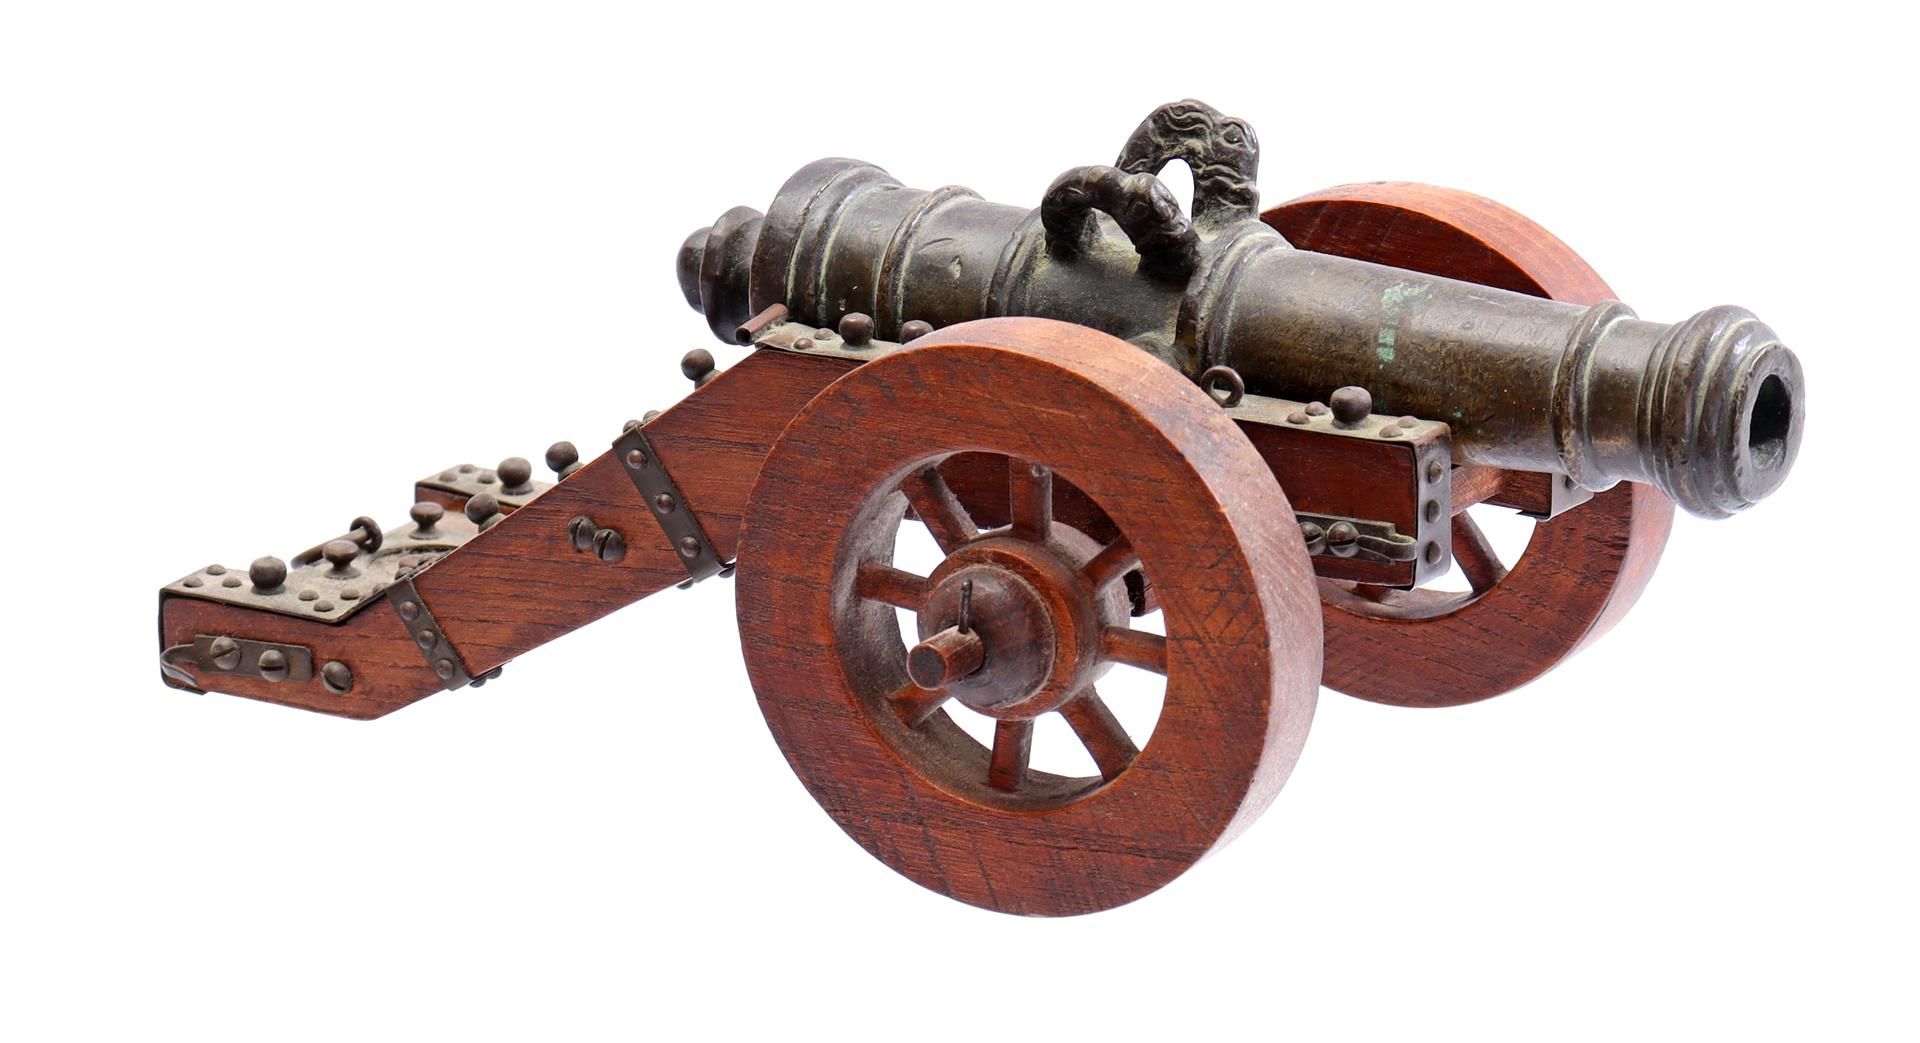 Bronze table gun in wooden gun carriage